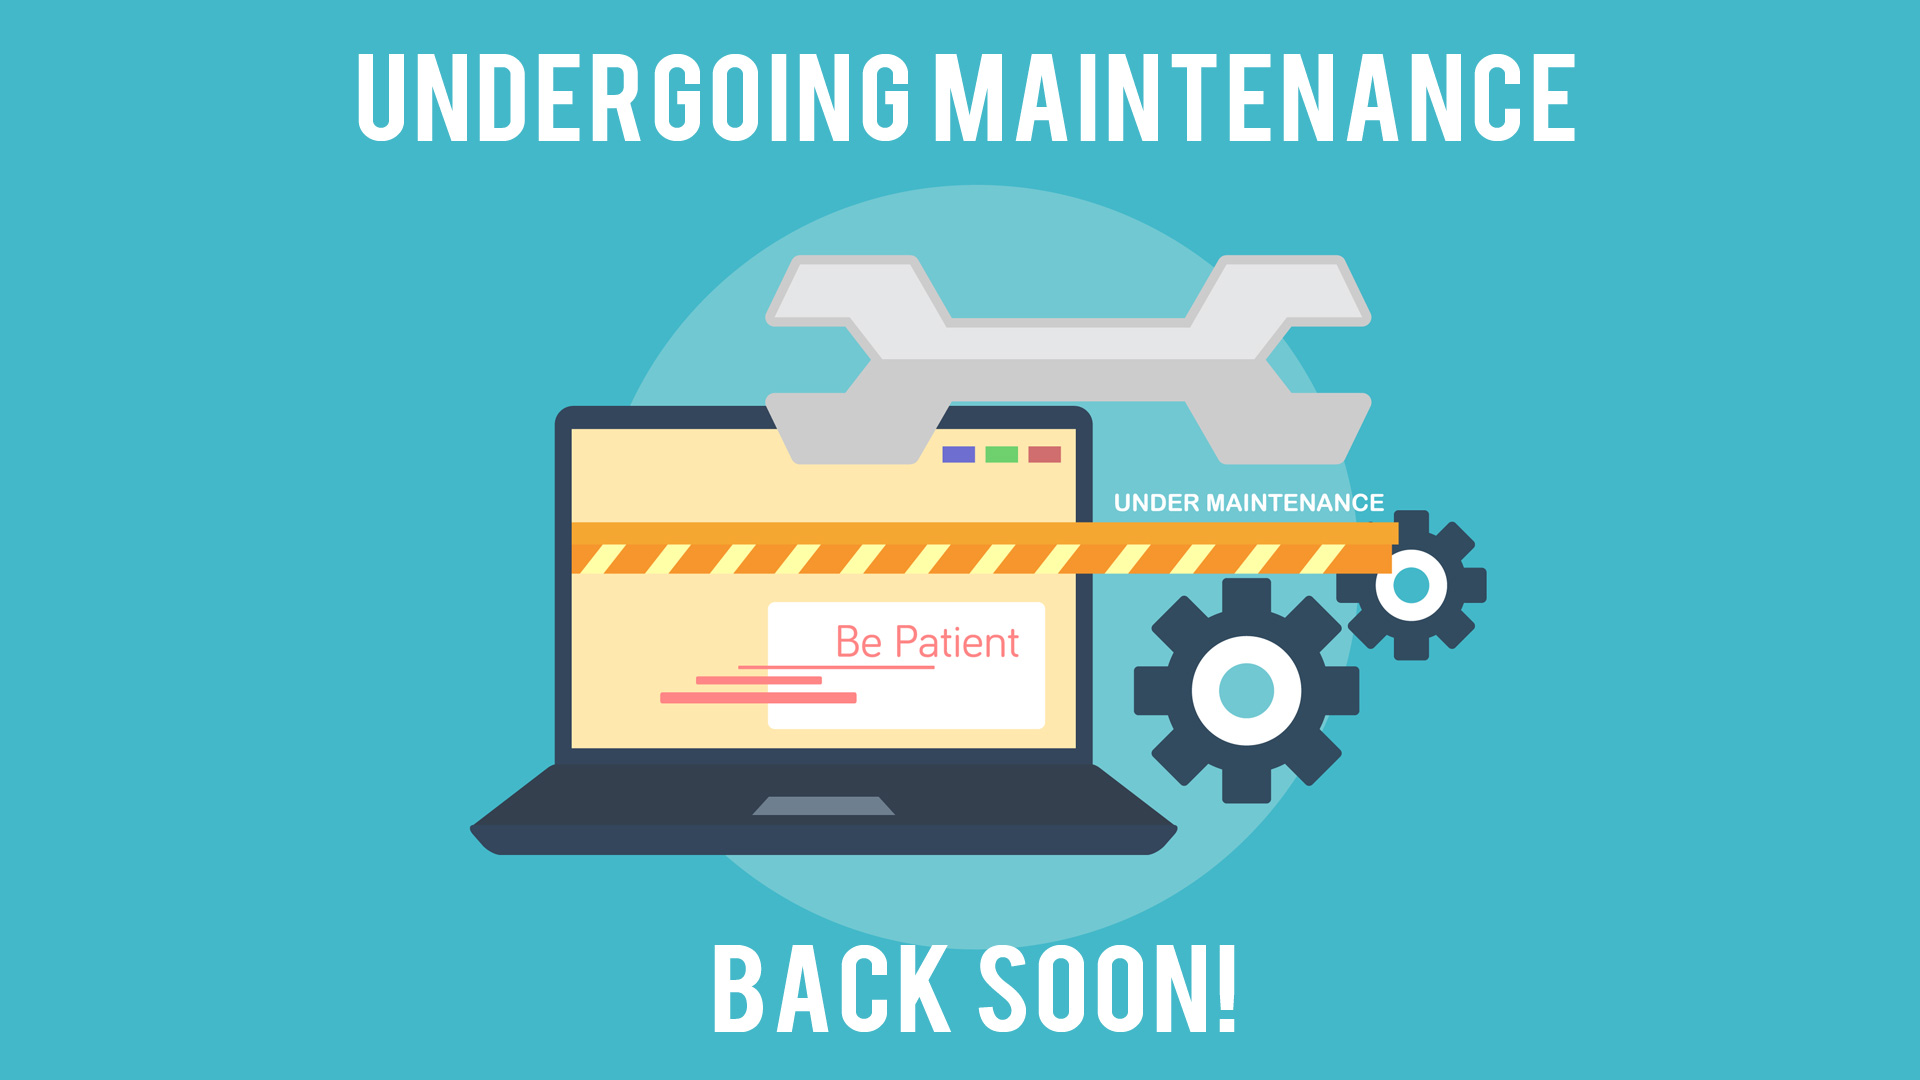 BBQDragon:: Under maintenance